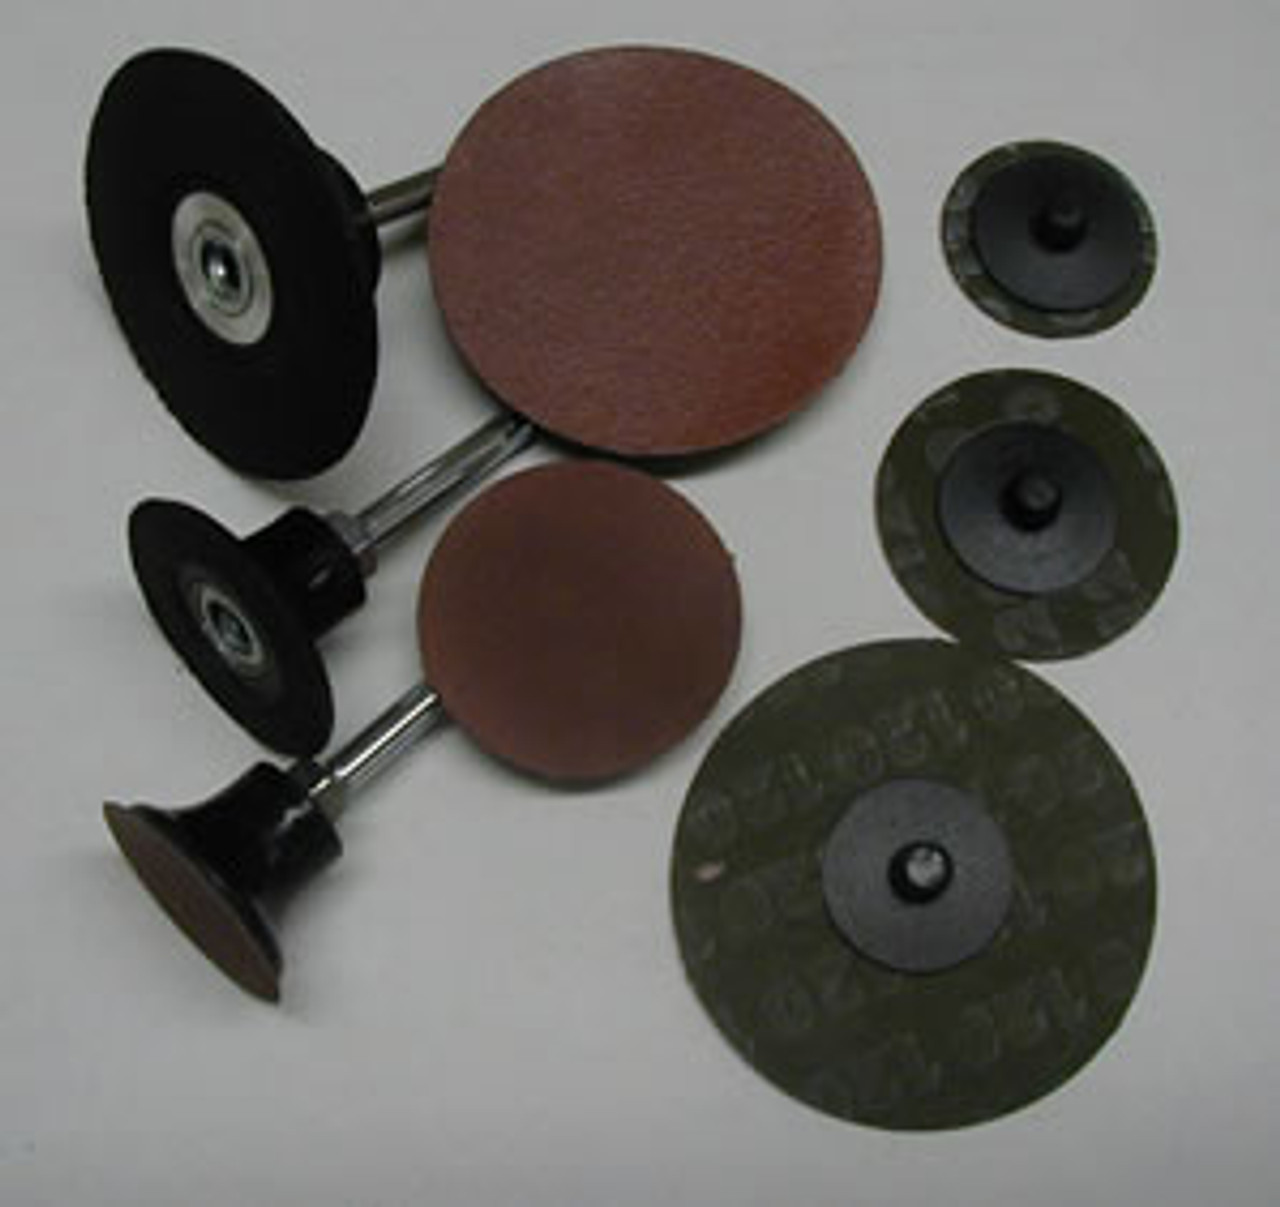 Aluminum Oxide Sanding Disk 2" - 50 Grit